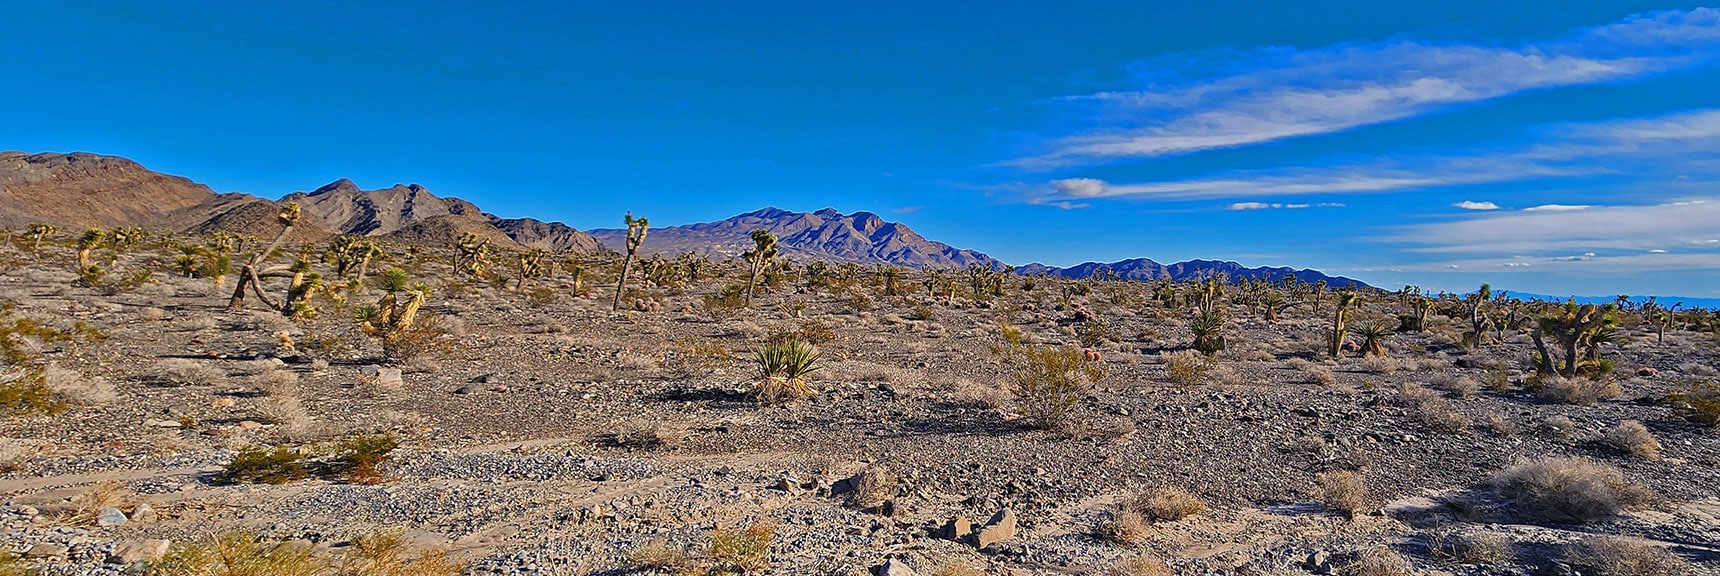 Gass Peak in the Distance | Fossil Ridge Far East | Desert National Wildlife Refuge, Nevada